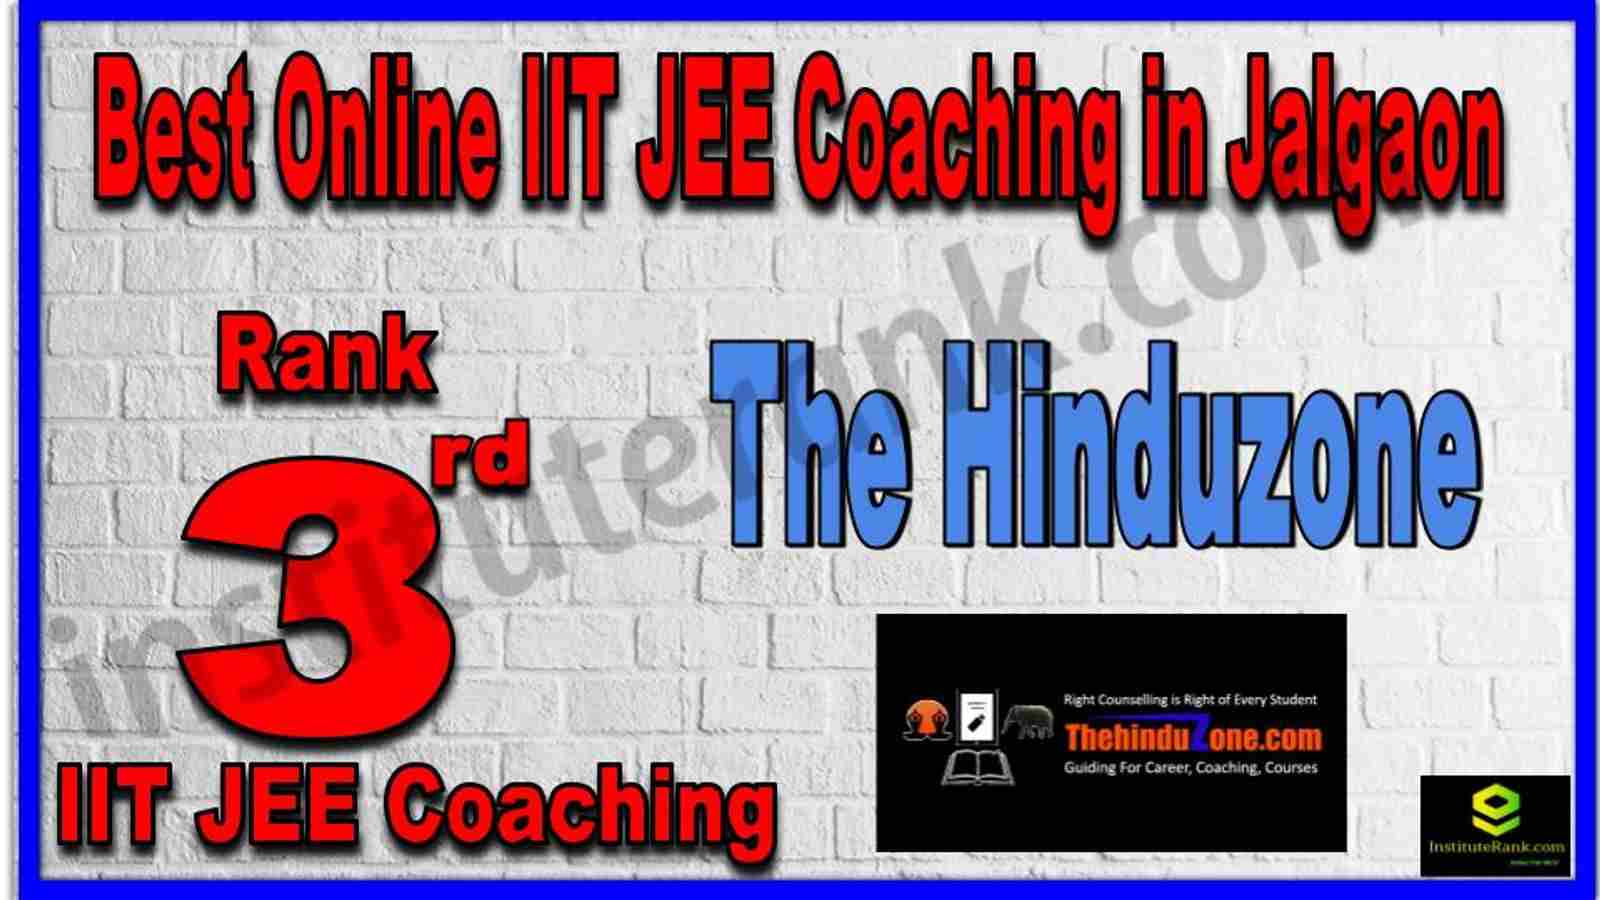 Rank 3rd Best Online IIT JEE Coaching in Jalgaon